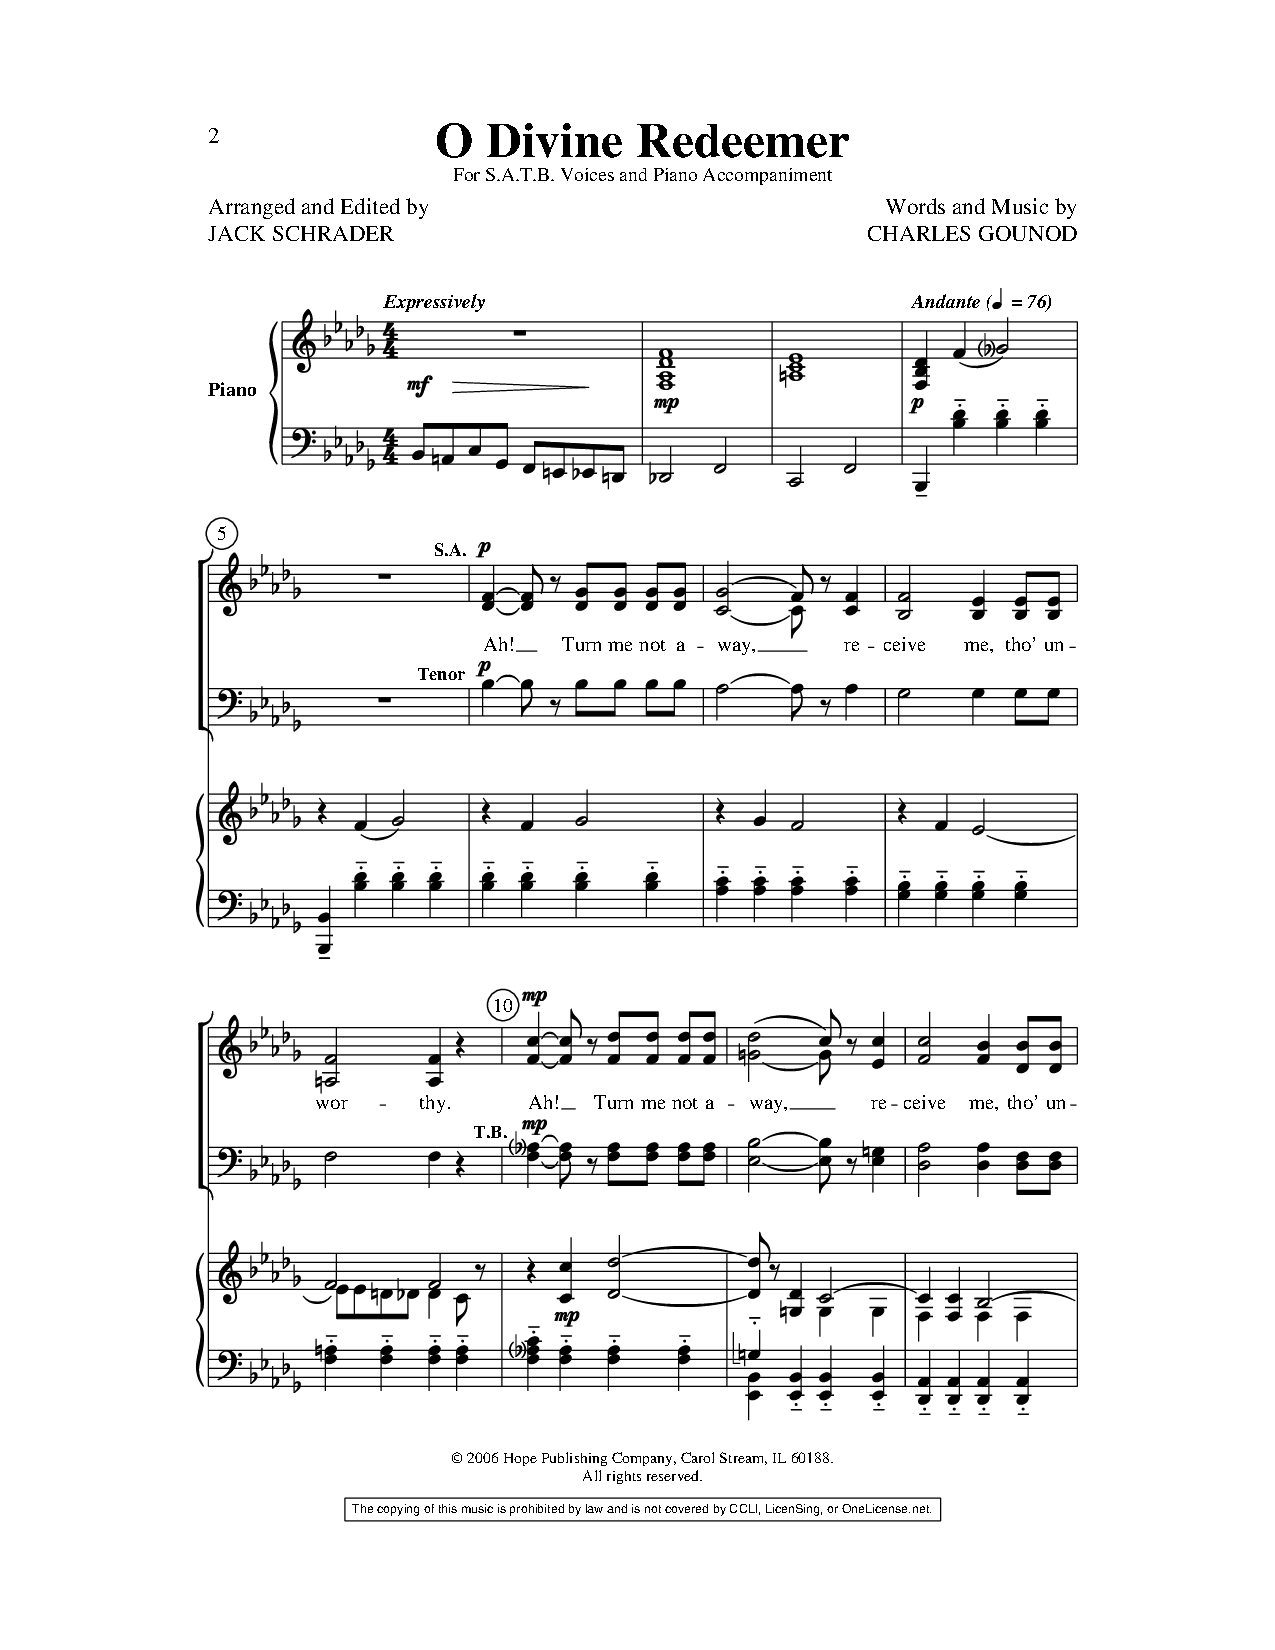 o divine redeemer gounod sheet music free download